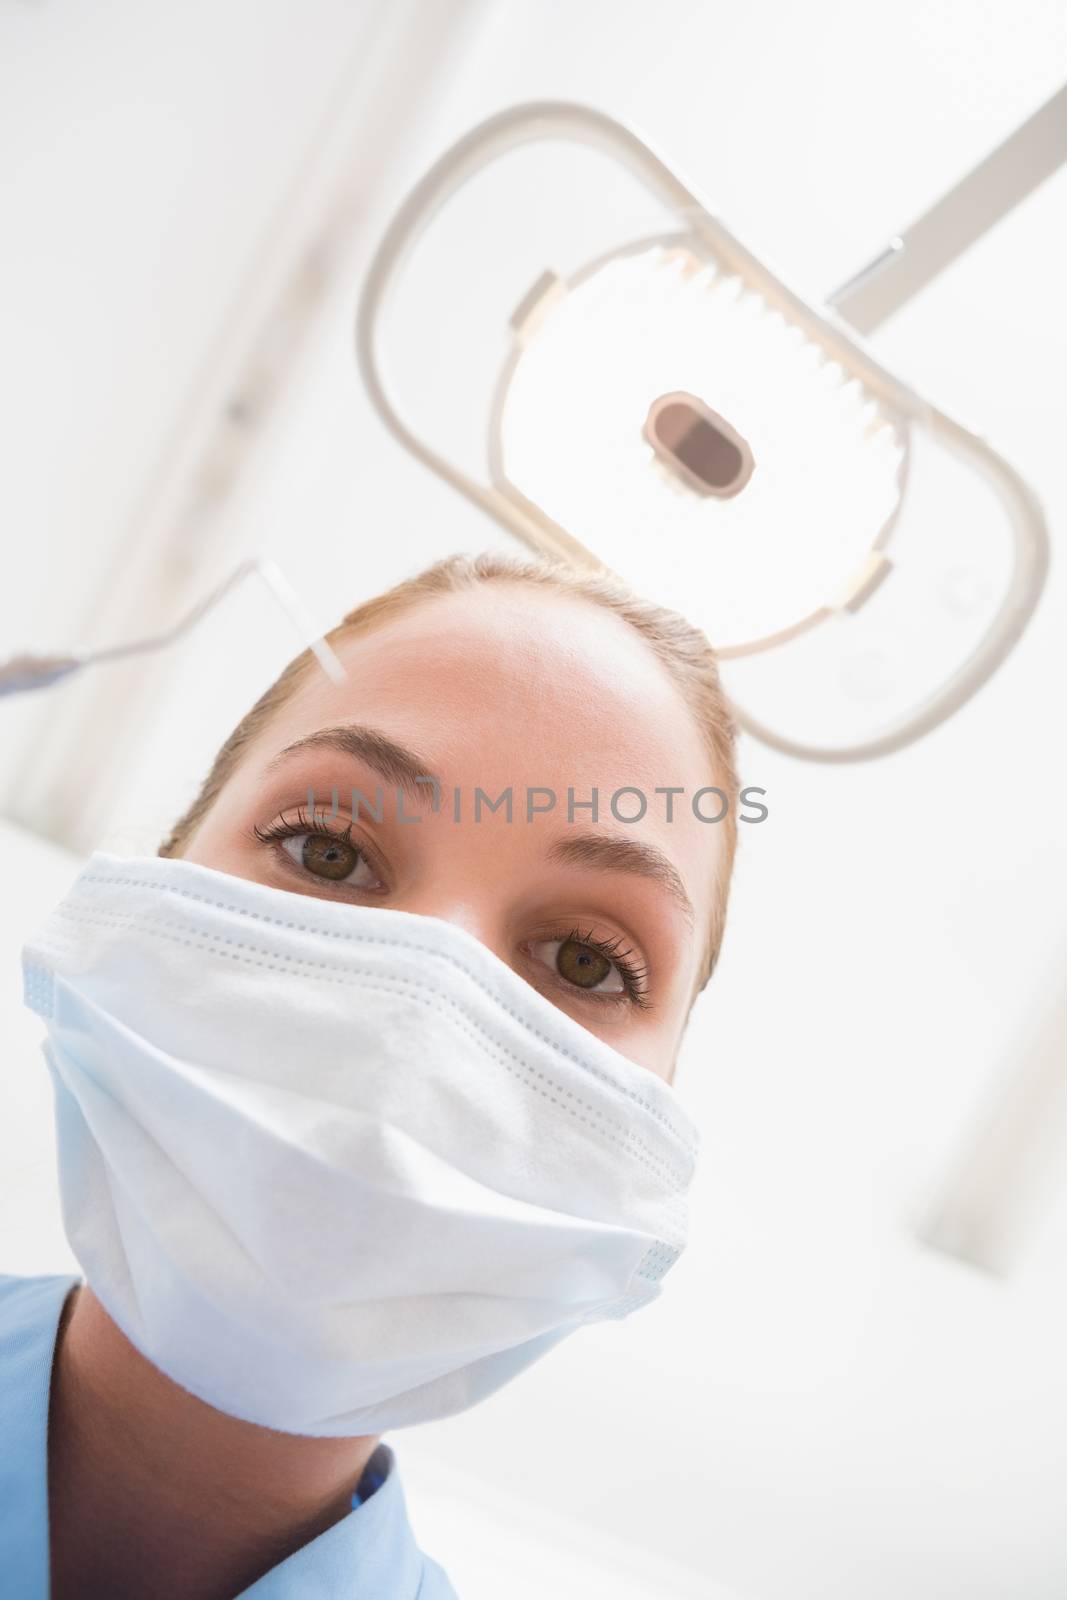 Dentist in surgical mask holding dental explorer over patient by Wavebreakmedia